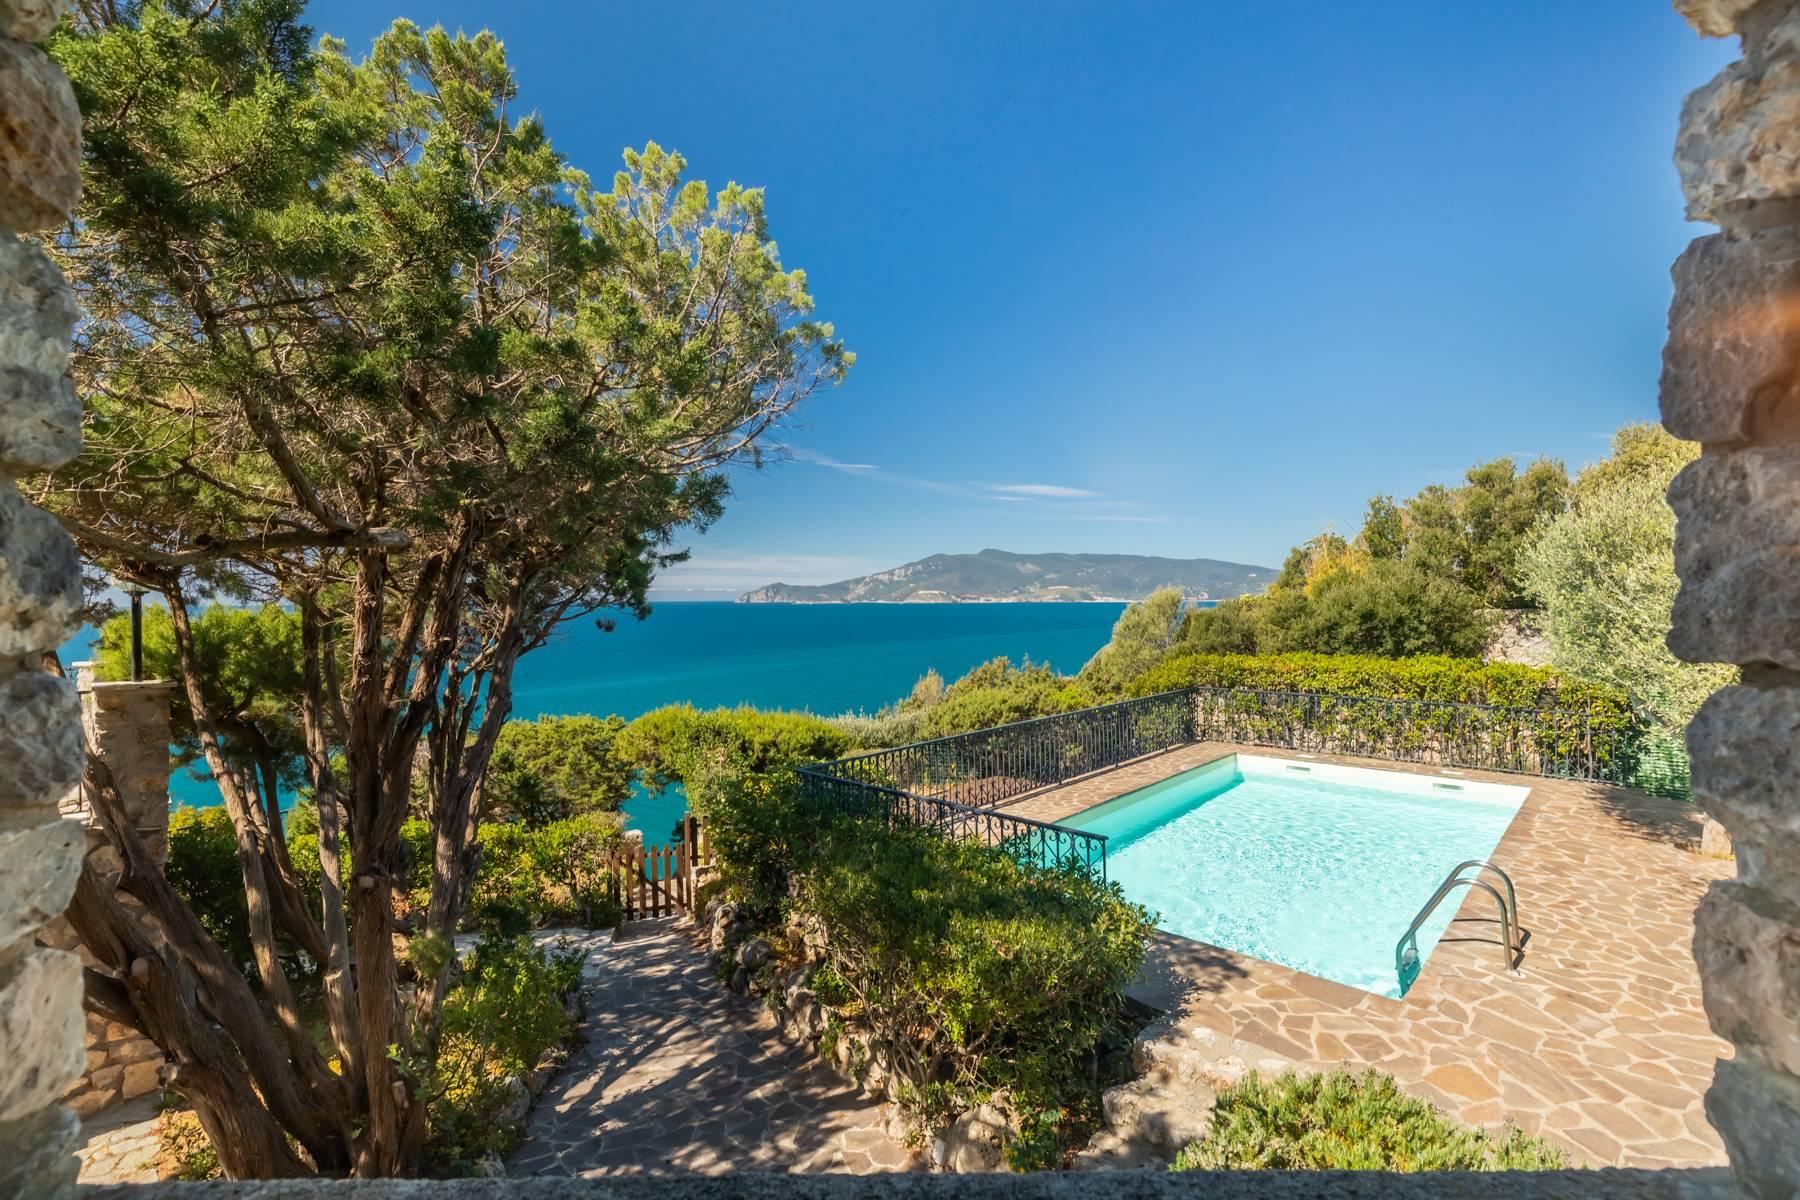 Stunning Villa Pied dans l'eau with pool in Monte Argentario - 1